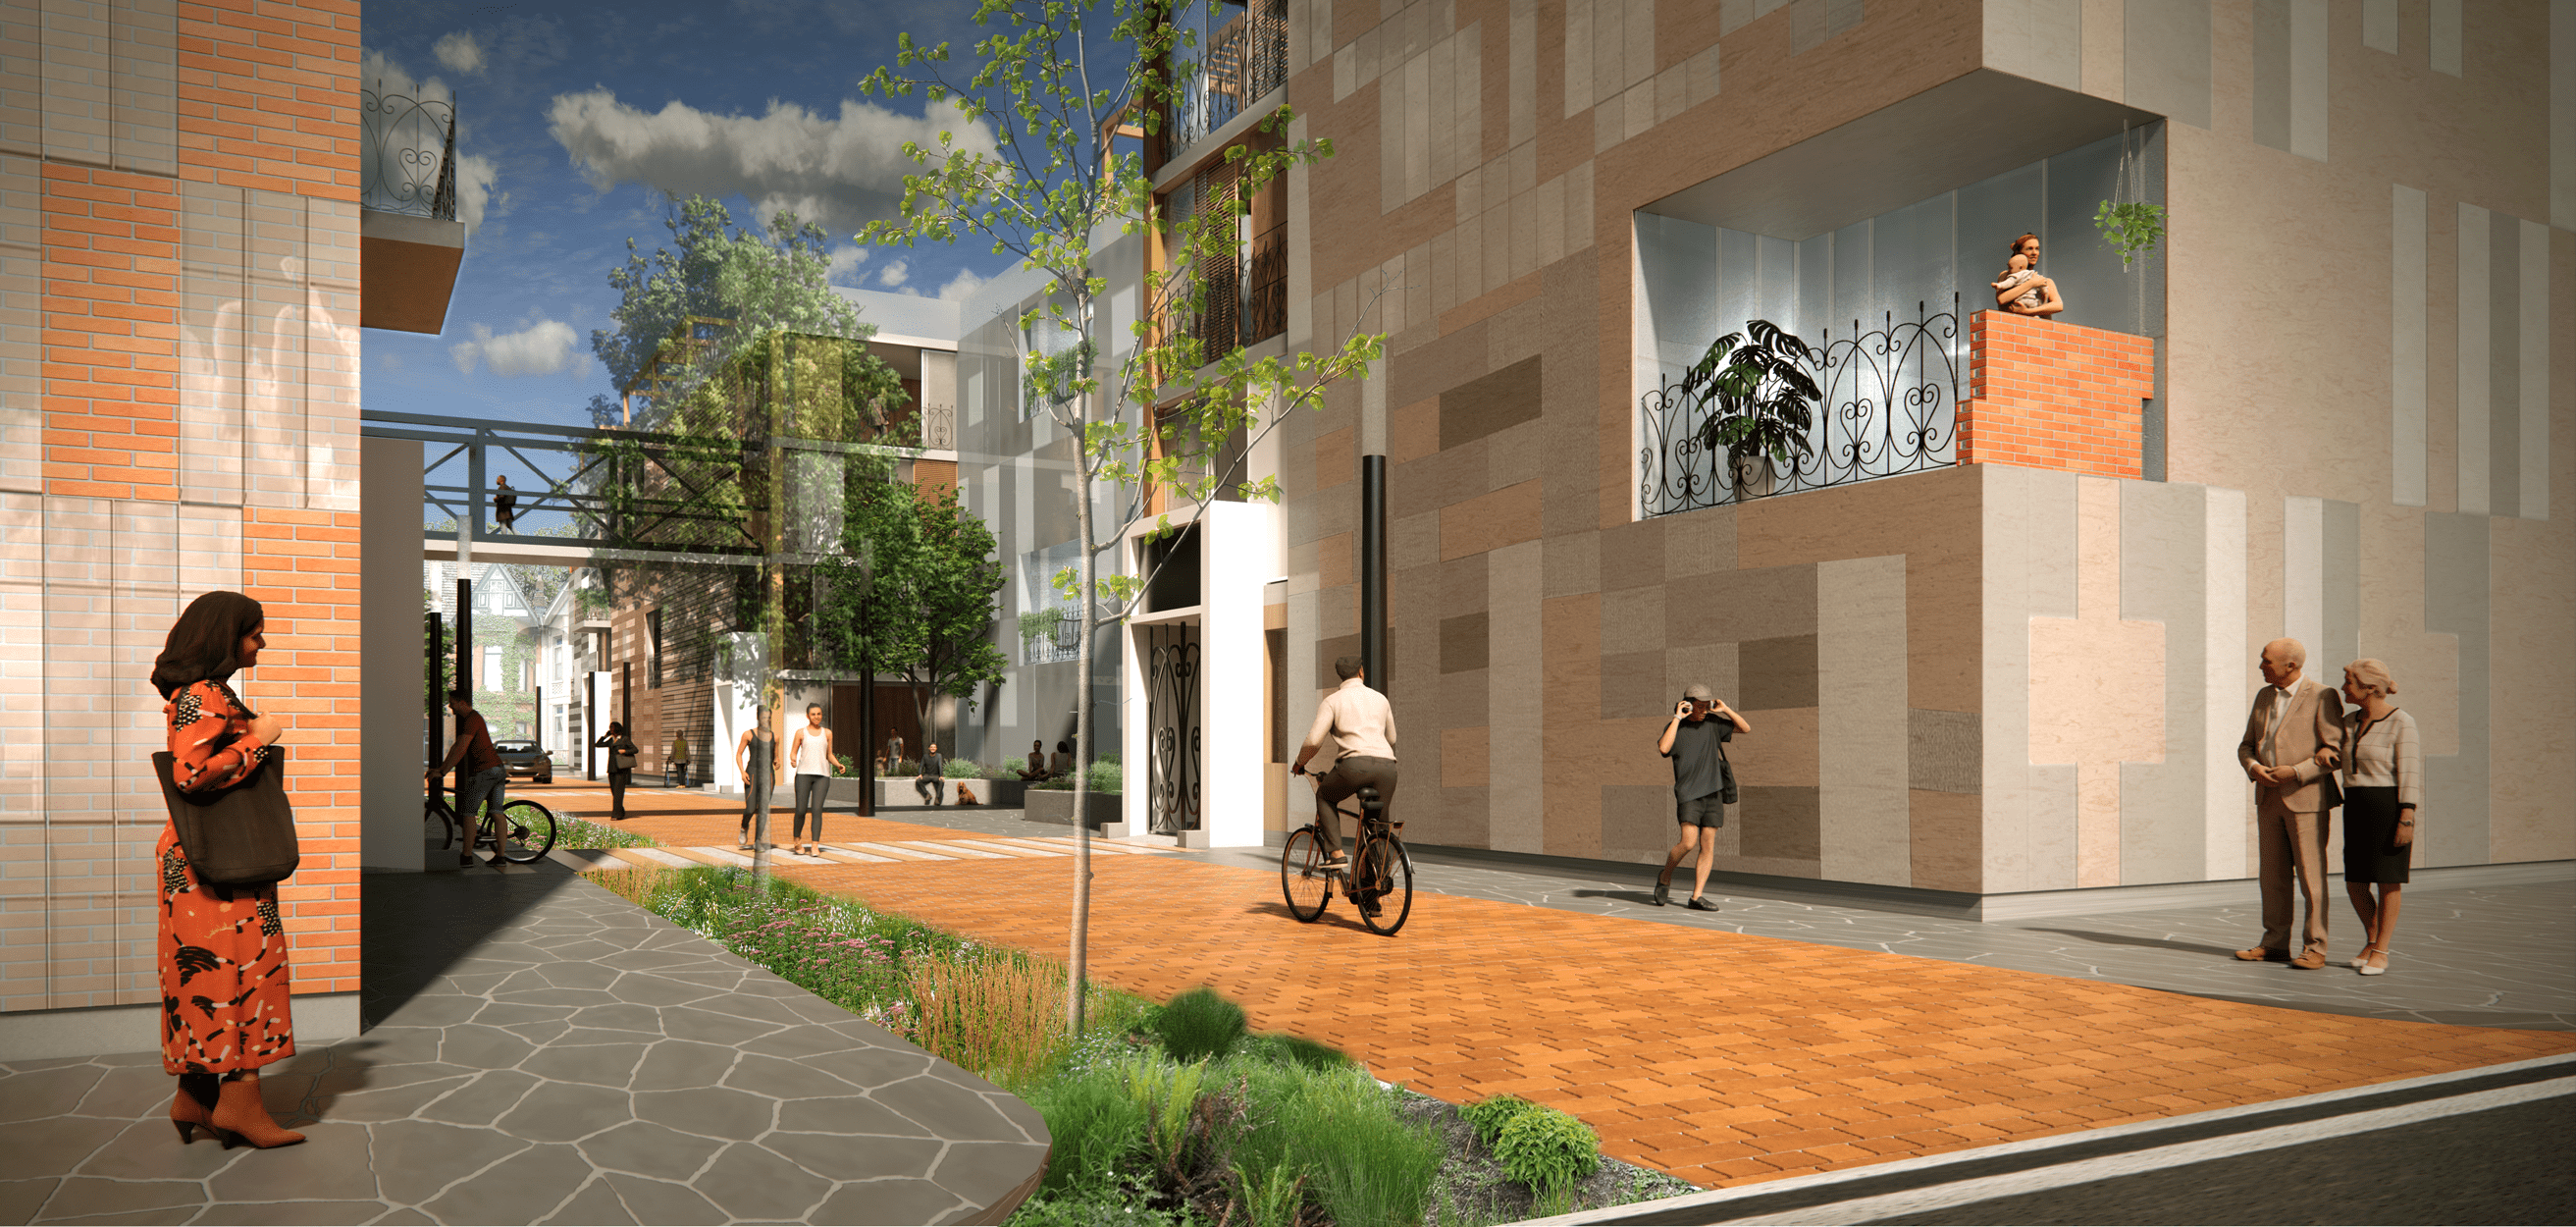 Collective Housing in the City: Garden Courtyard Apartments